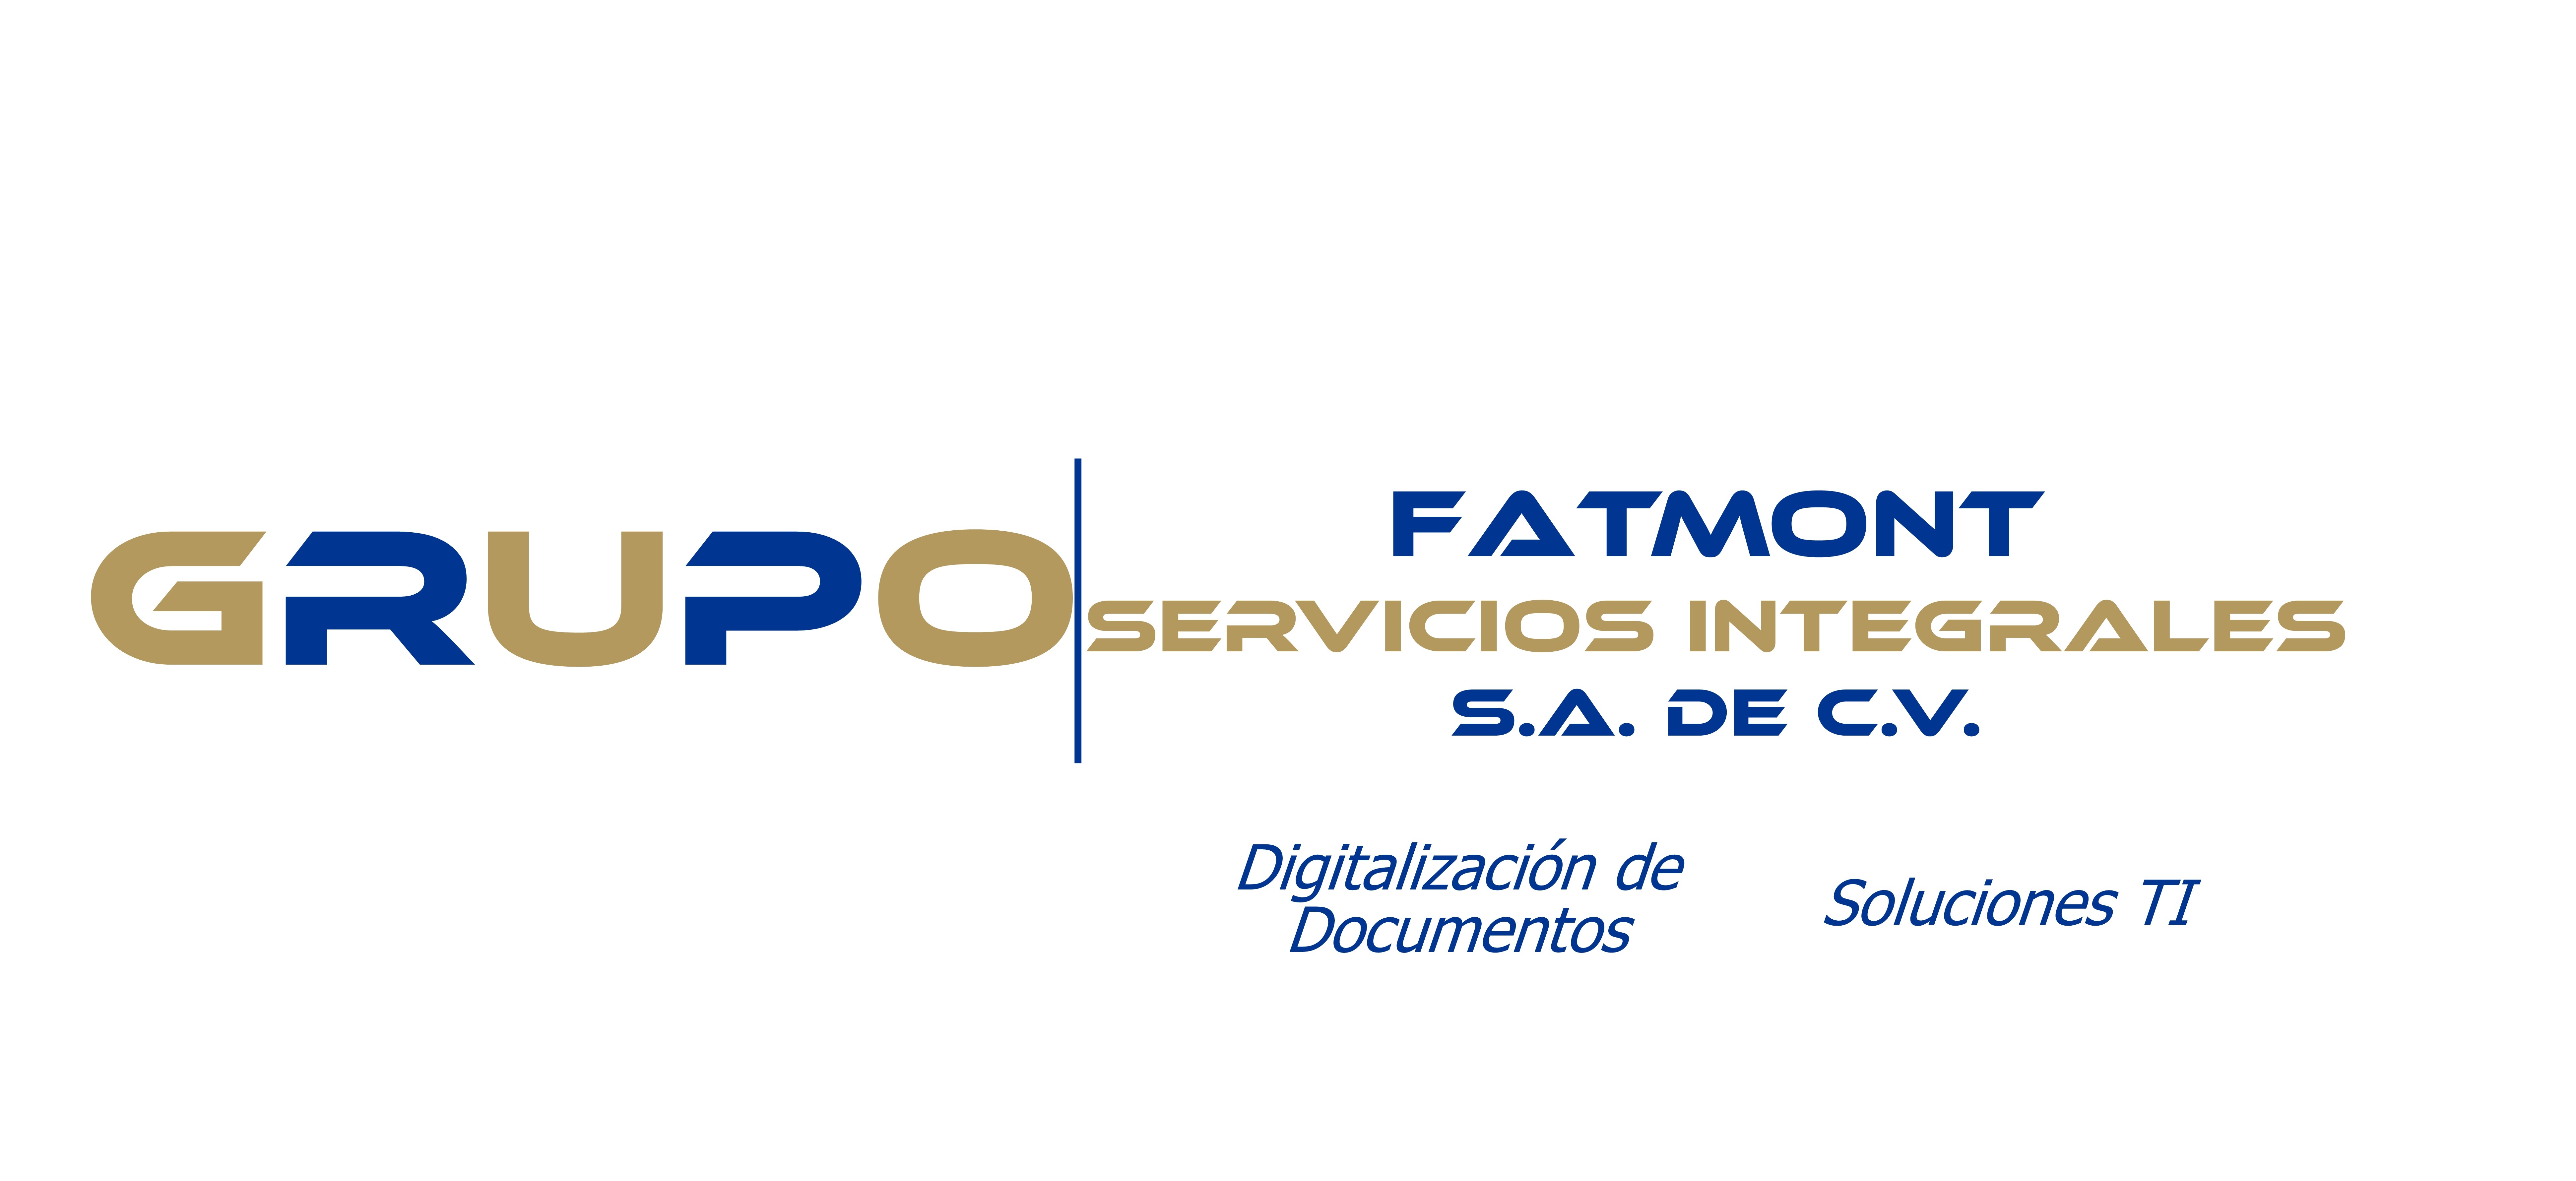 fatmont logo